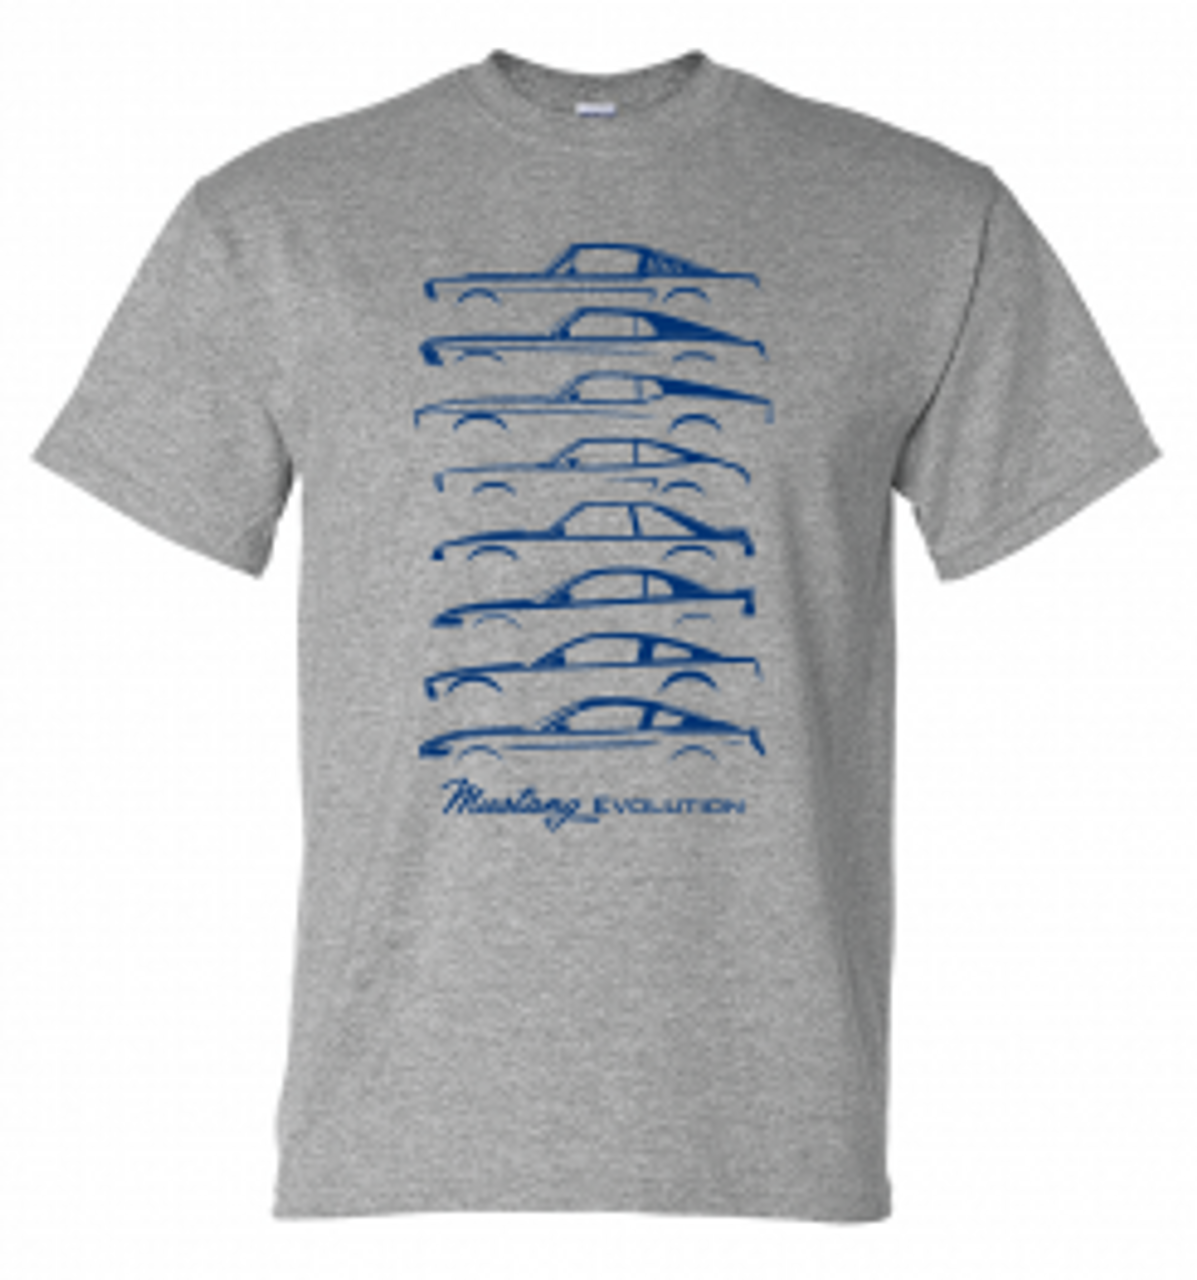 Ford Mustang Evolution T-Shirt